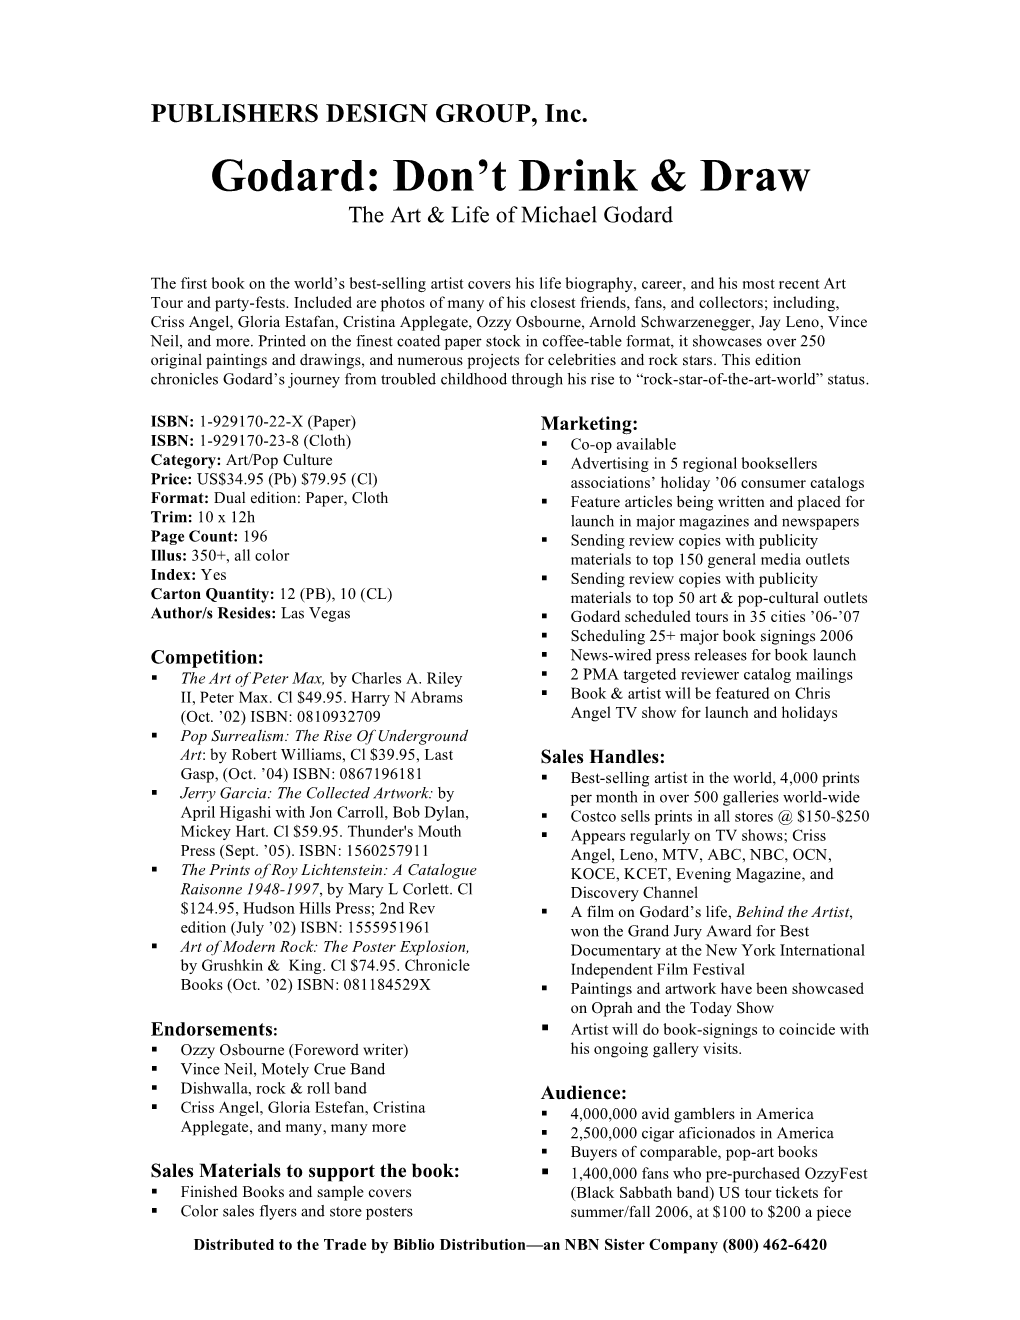 Godard: Don’T Drink & Draw the Art & Life of Michael Godard